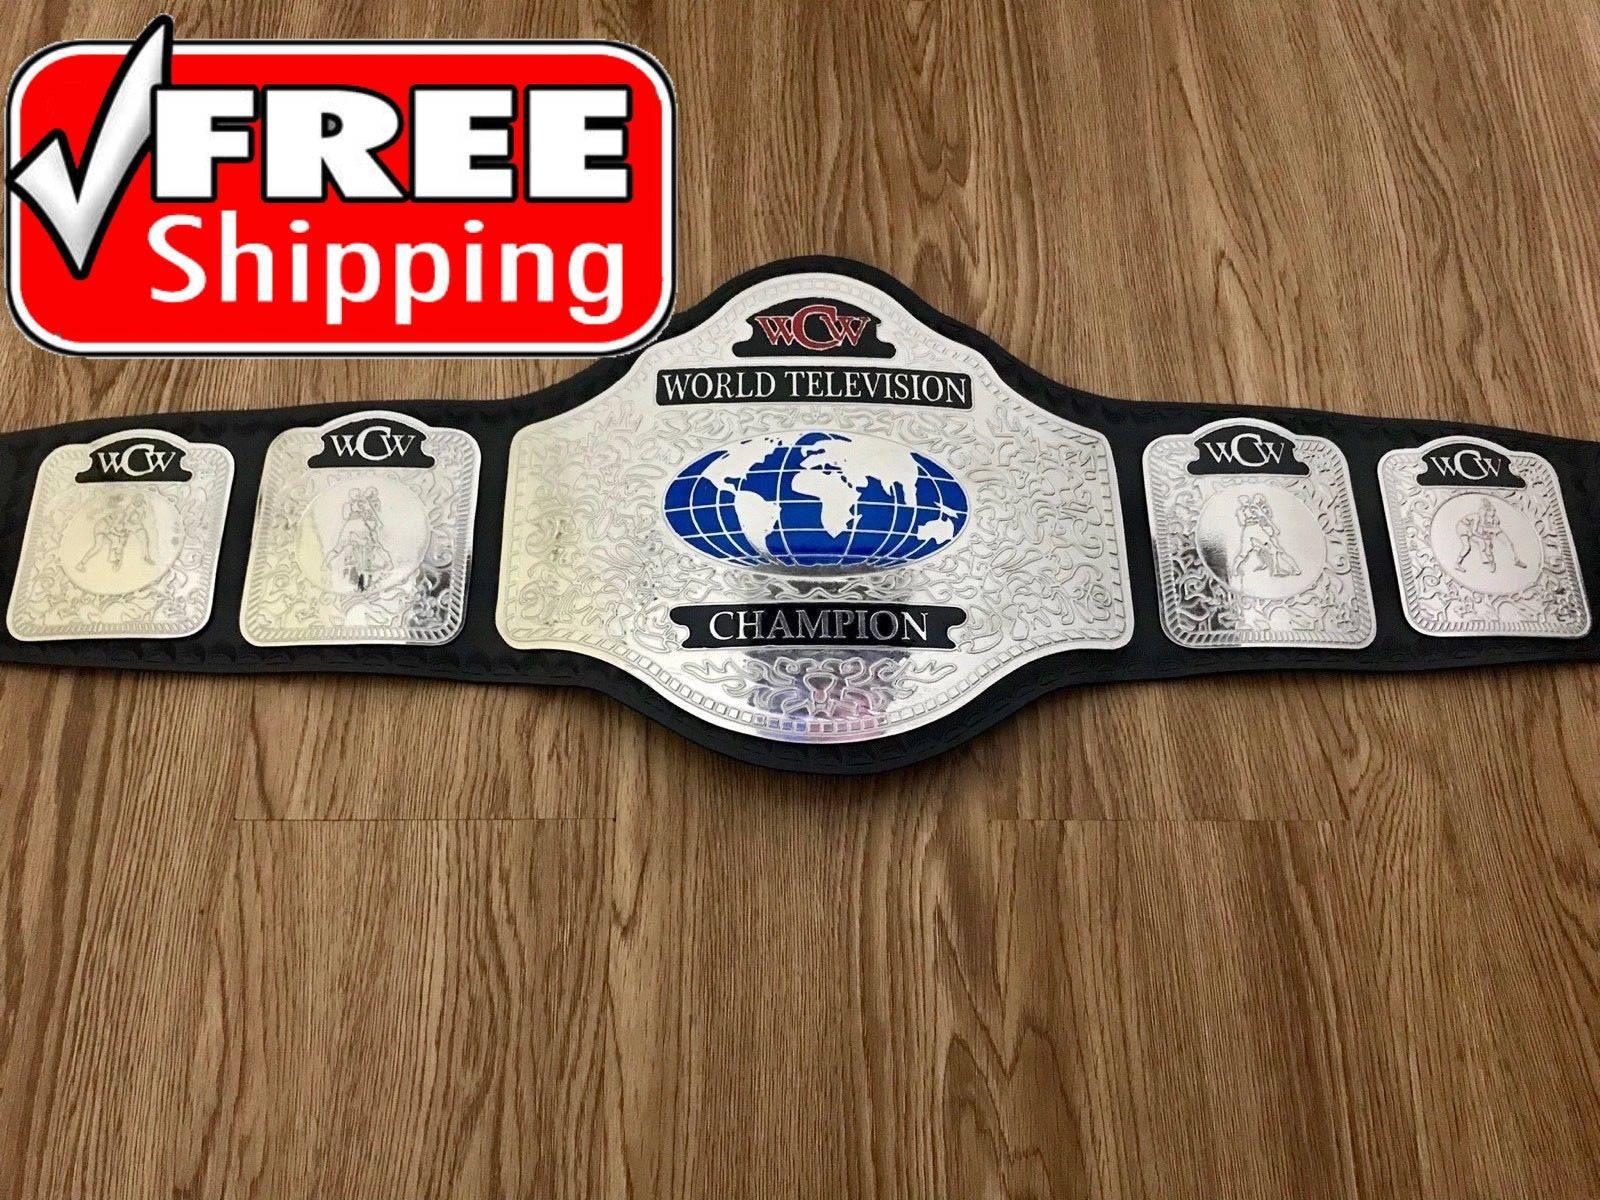 WCW WORLD TELEVISION Brass Championship Belt